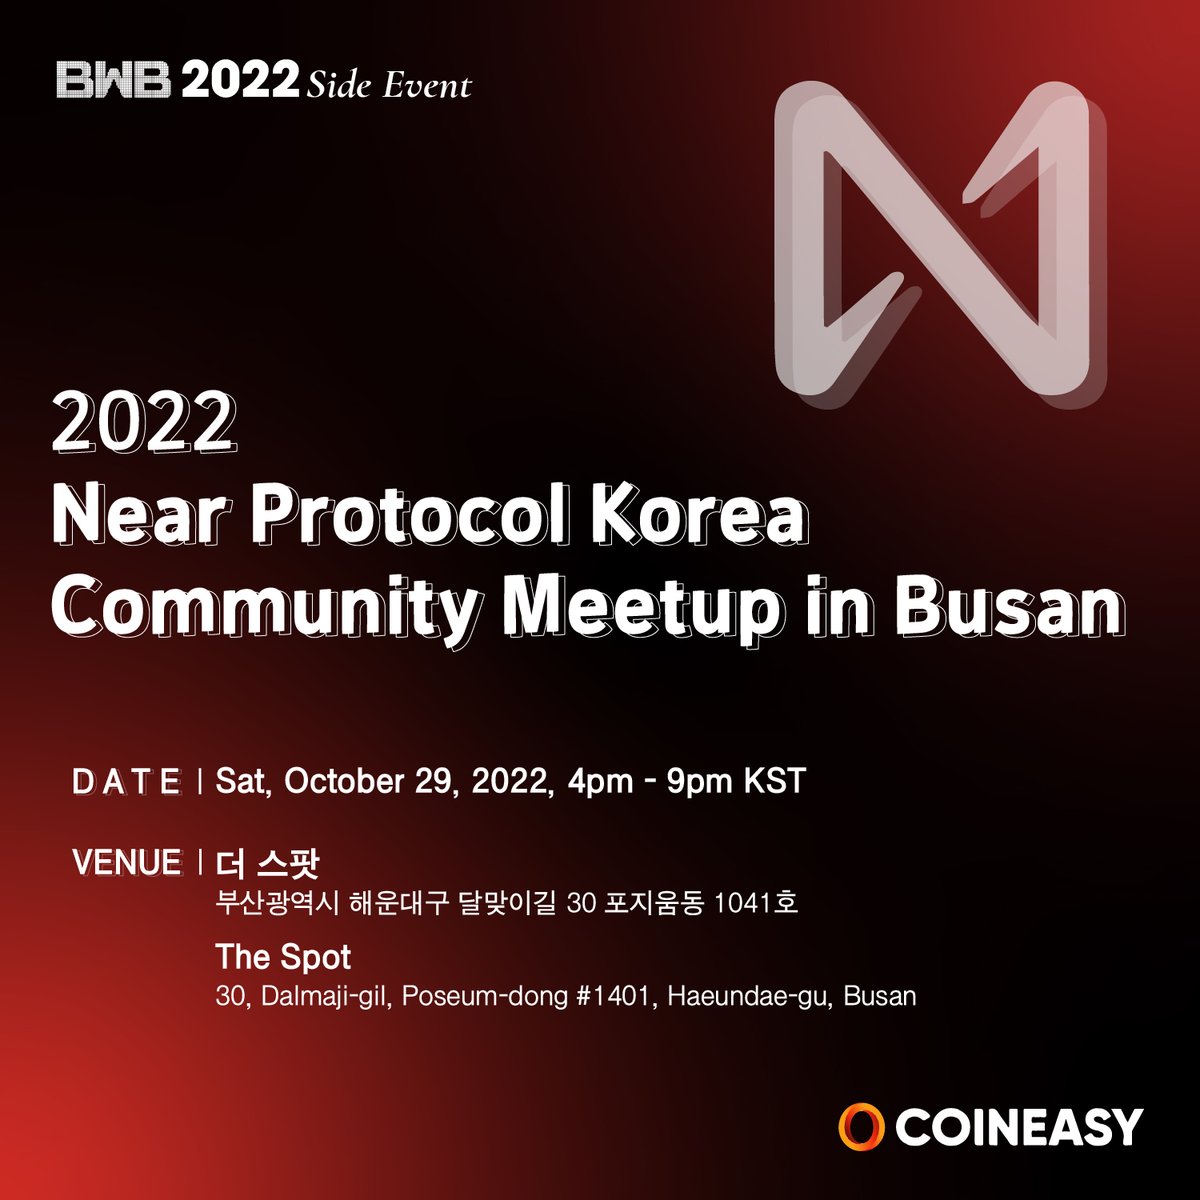 2022 Near Protocol Korea Commuity Meetup in Busan 📍일시 : 2022년 10월 29일(토) 16시~21시 📍장소 : 더 스팟 📍프로그램 : Near Protocol Korea DAO 인트로, 니어 지갑 만들기, 니어 지갑 실사용 체험, 네트워킹 등 📌신청 링크 : eventbrite.com/e/near-protoco…